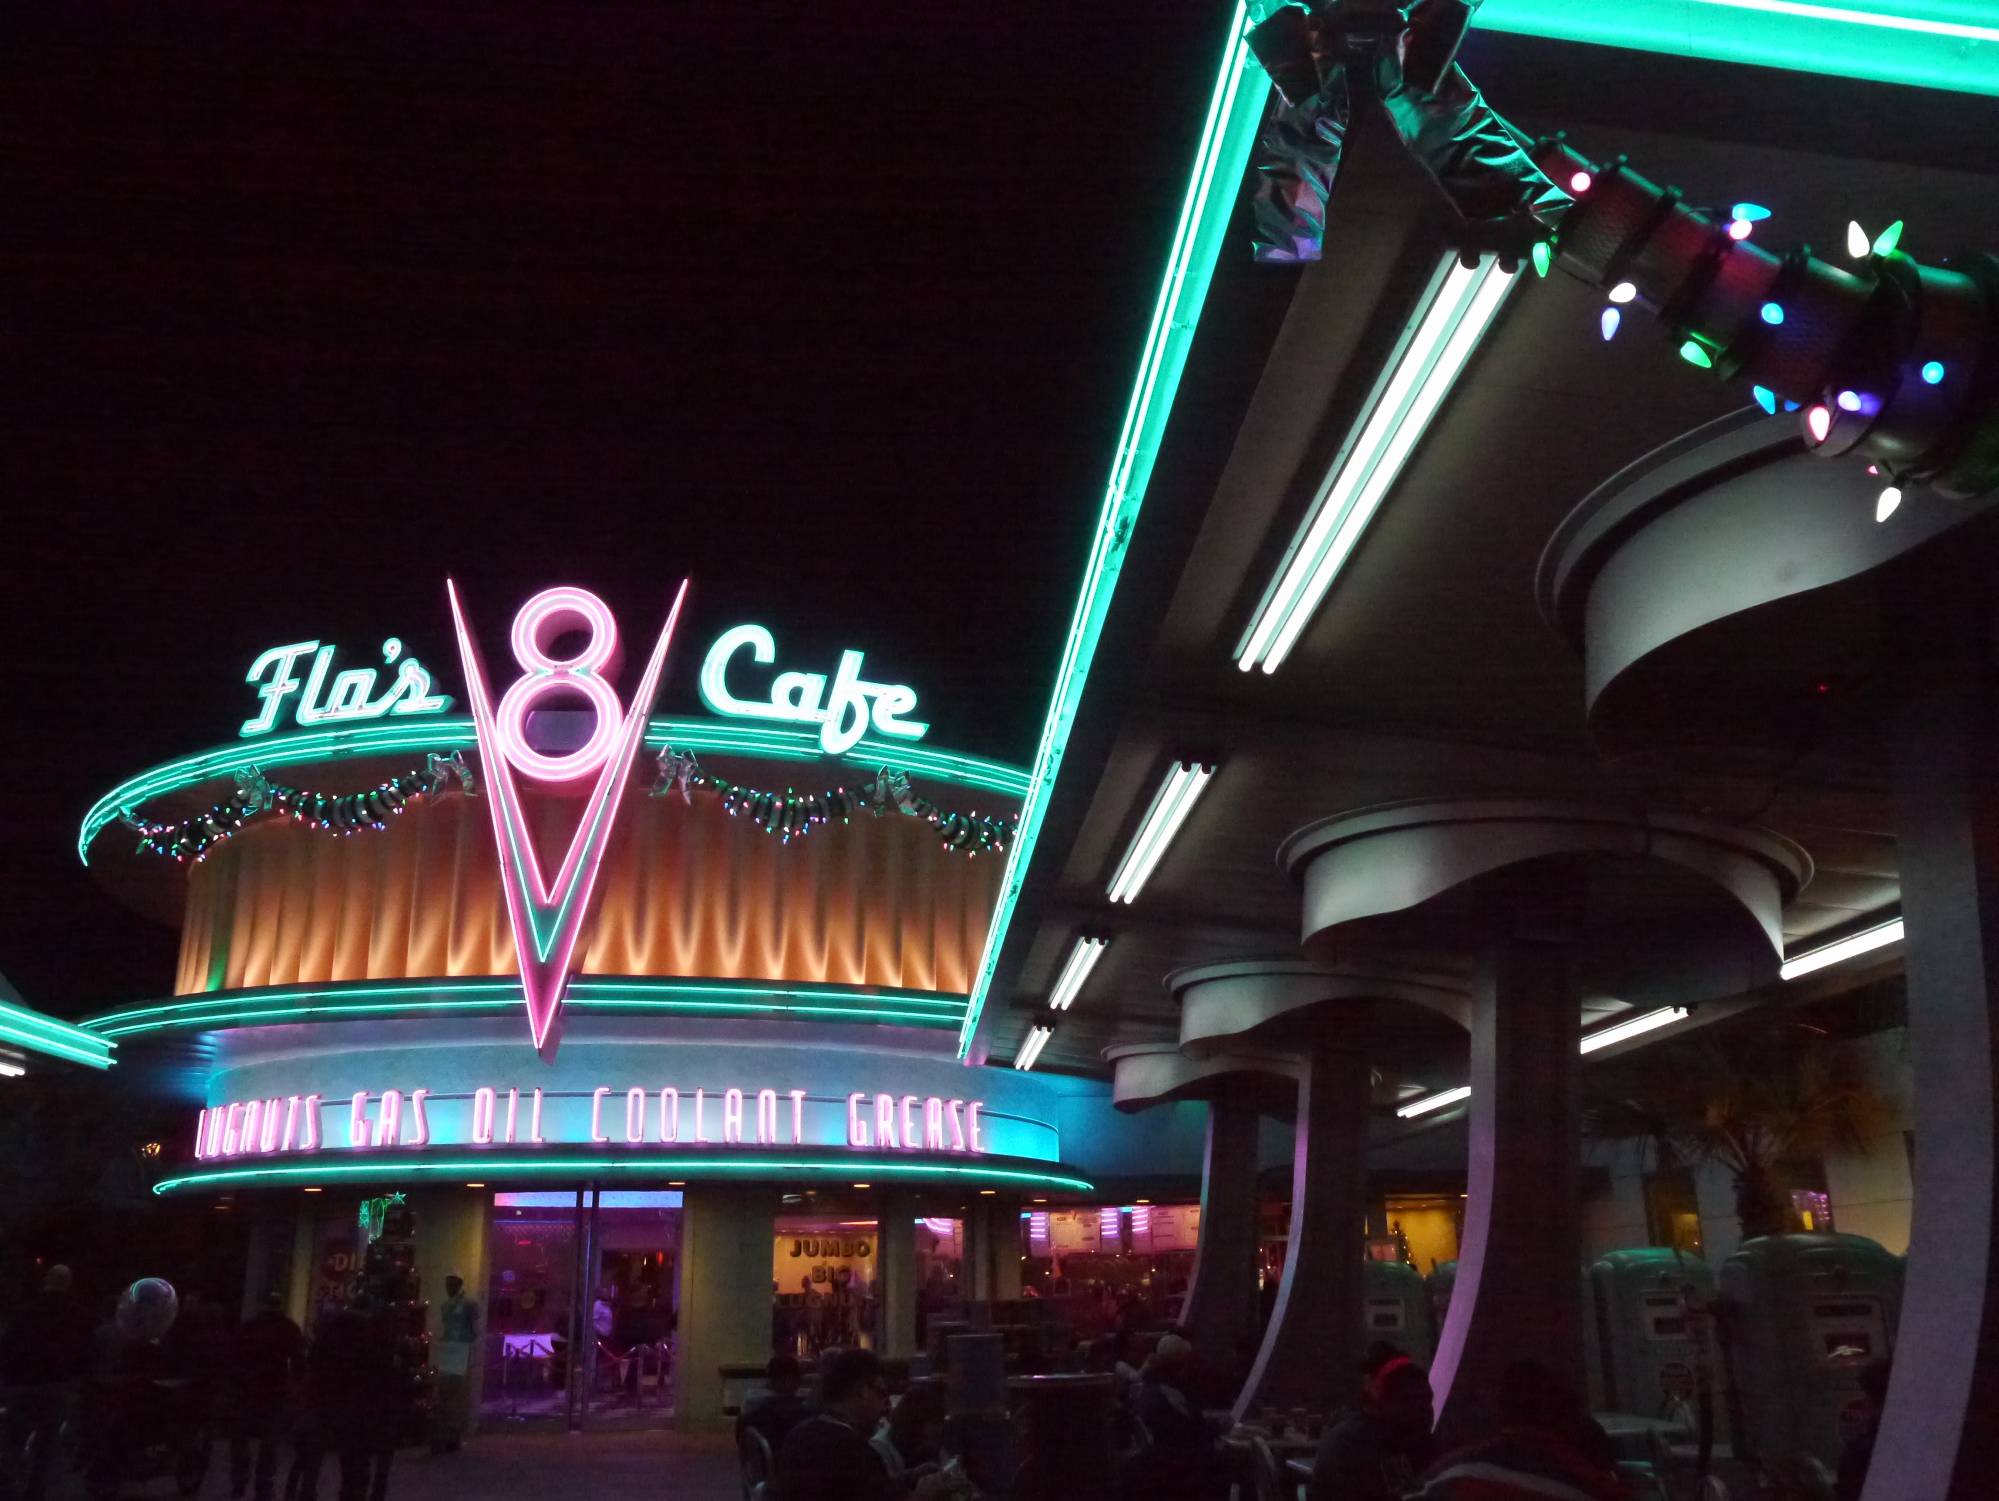 Flo's V8 cafe at night